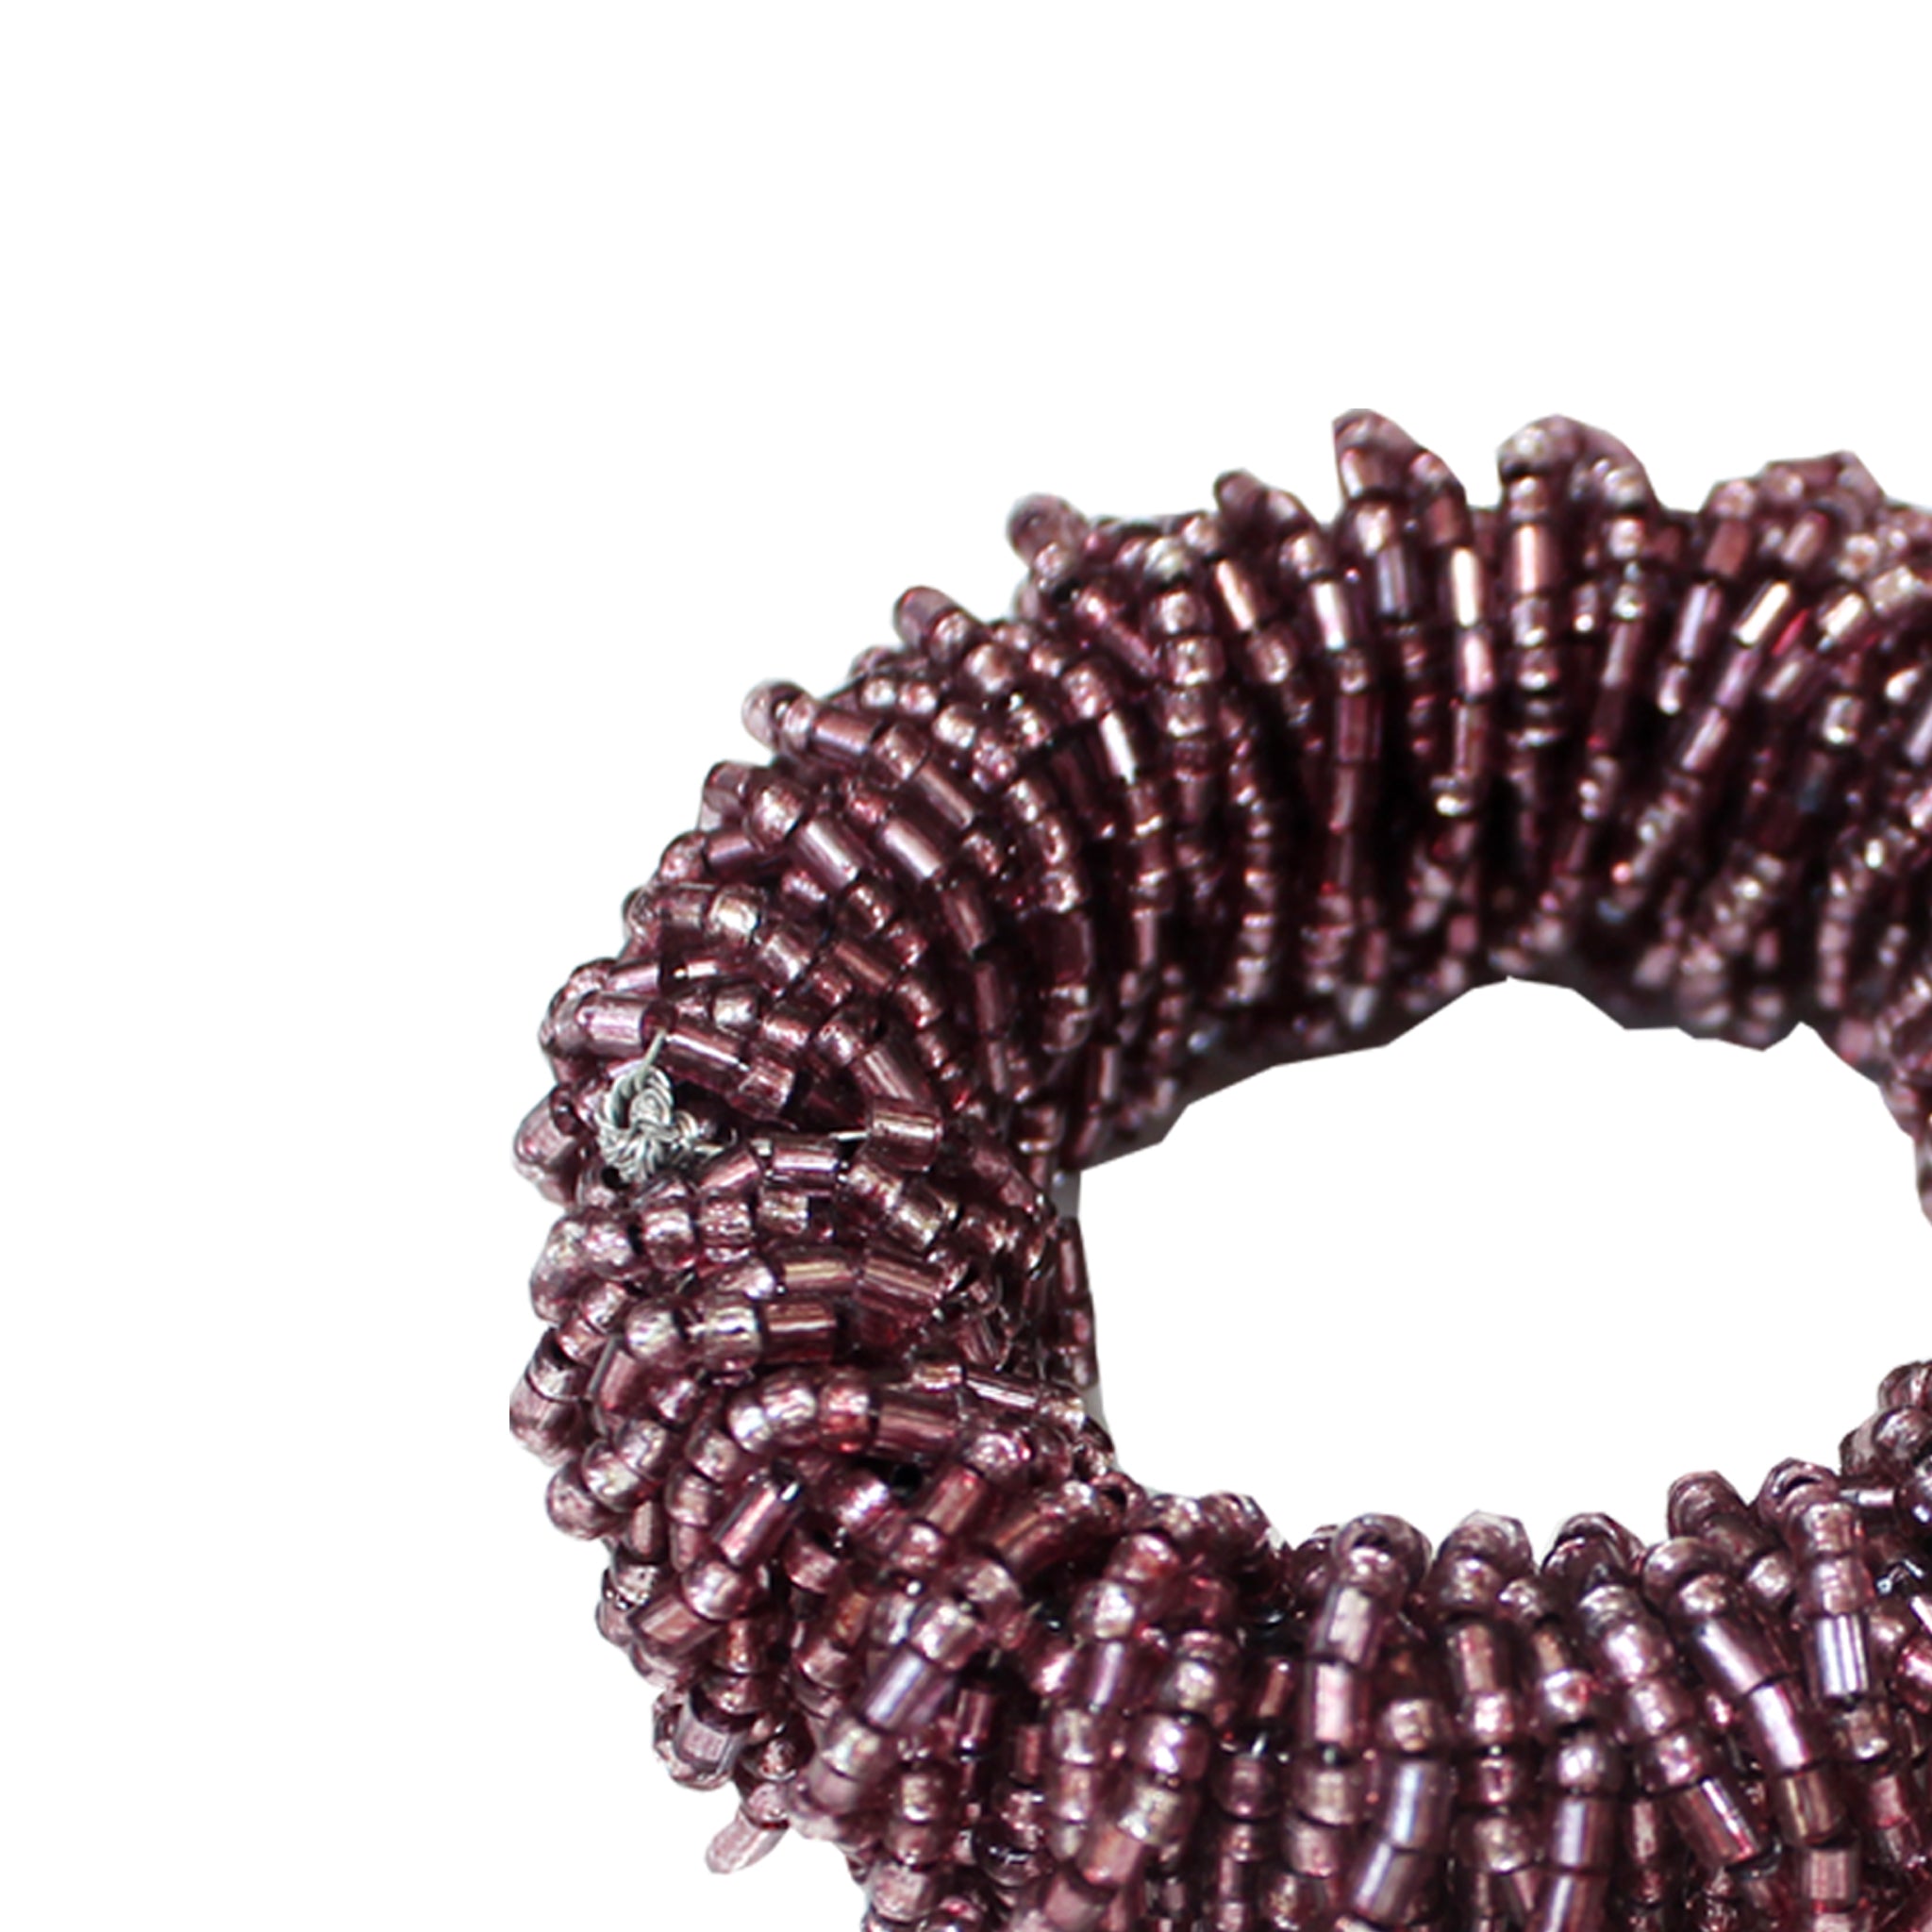 Linen by Trunkin'/ Beaded Napkin Ring Set of 4 / Purple/2" Dia